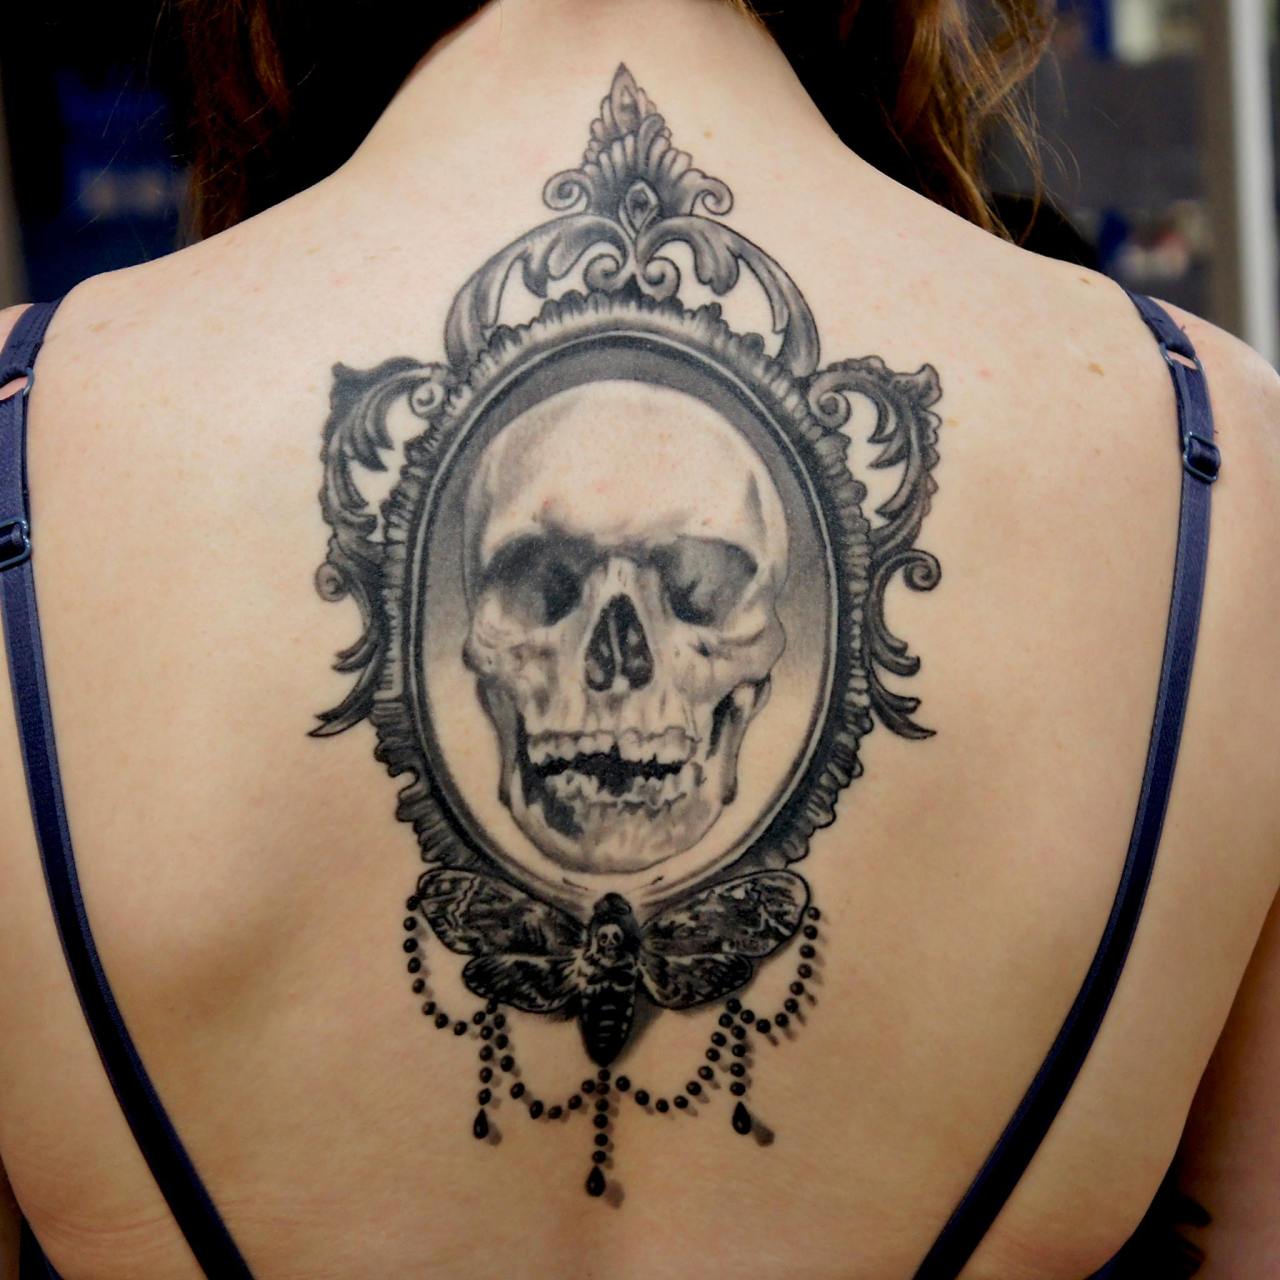 Cute girl skull tattoo designs